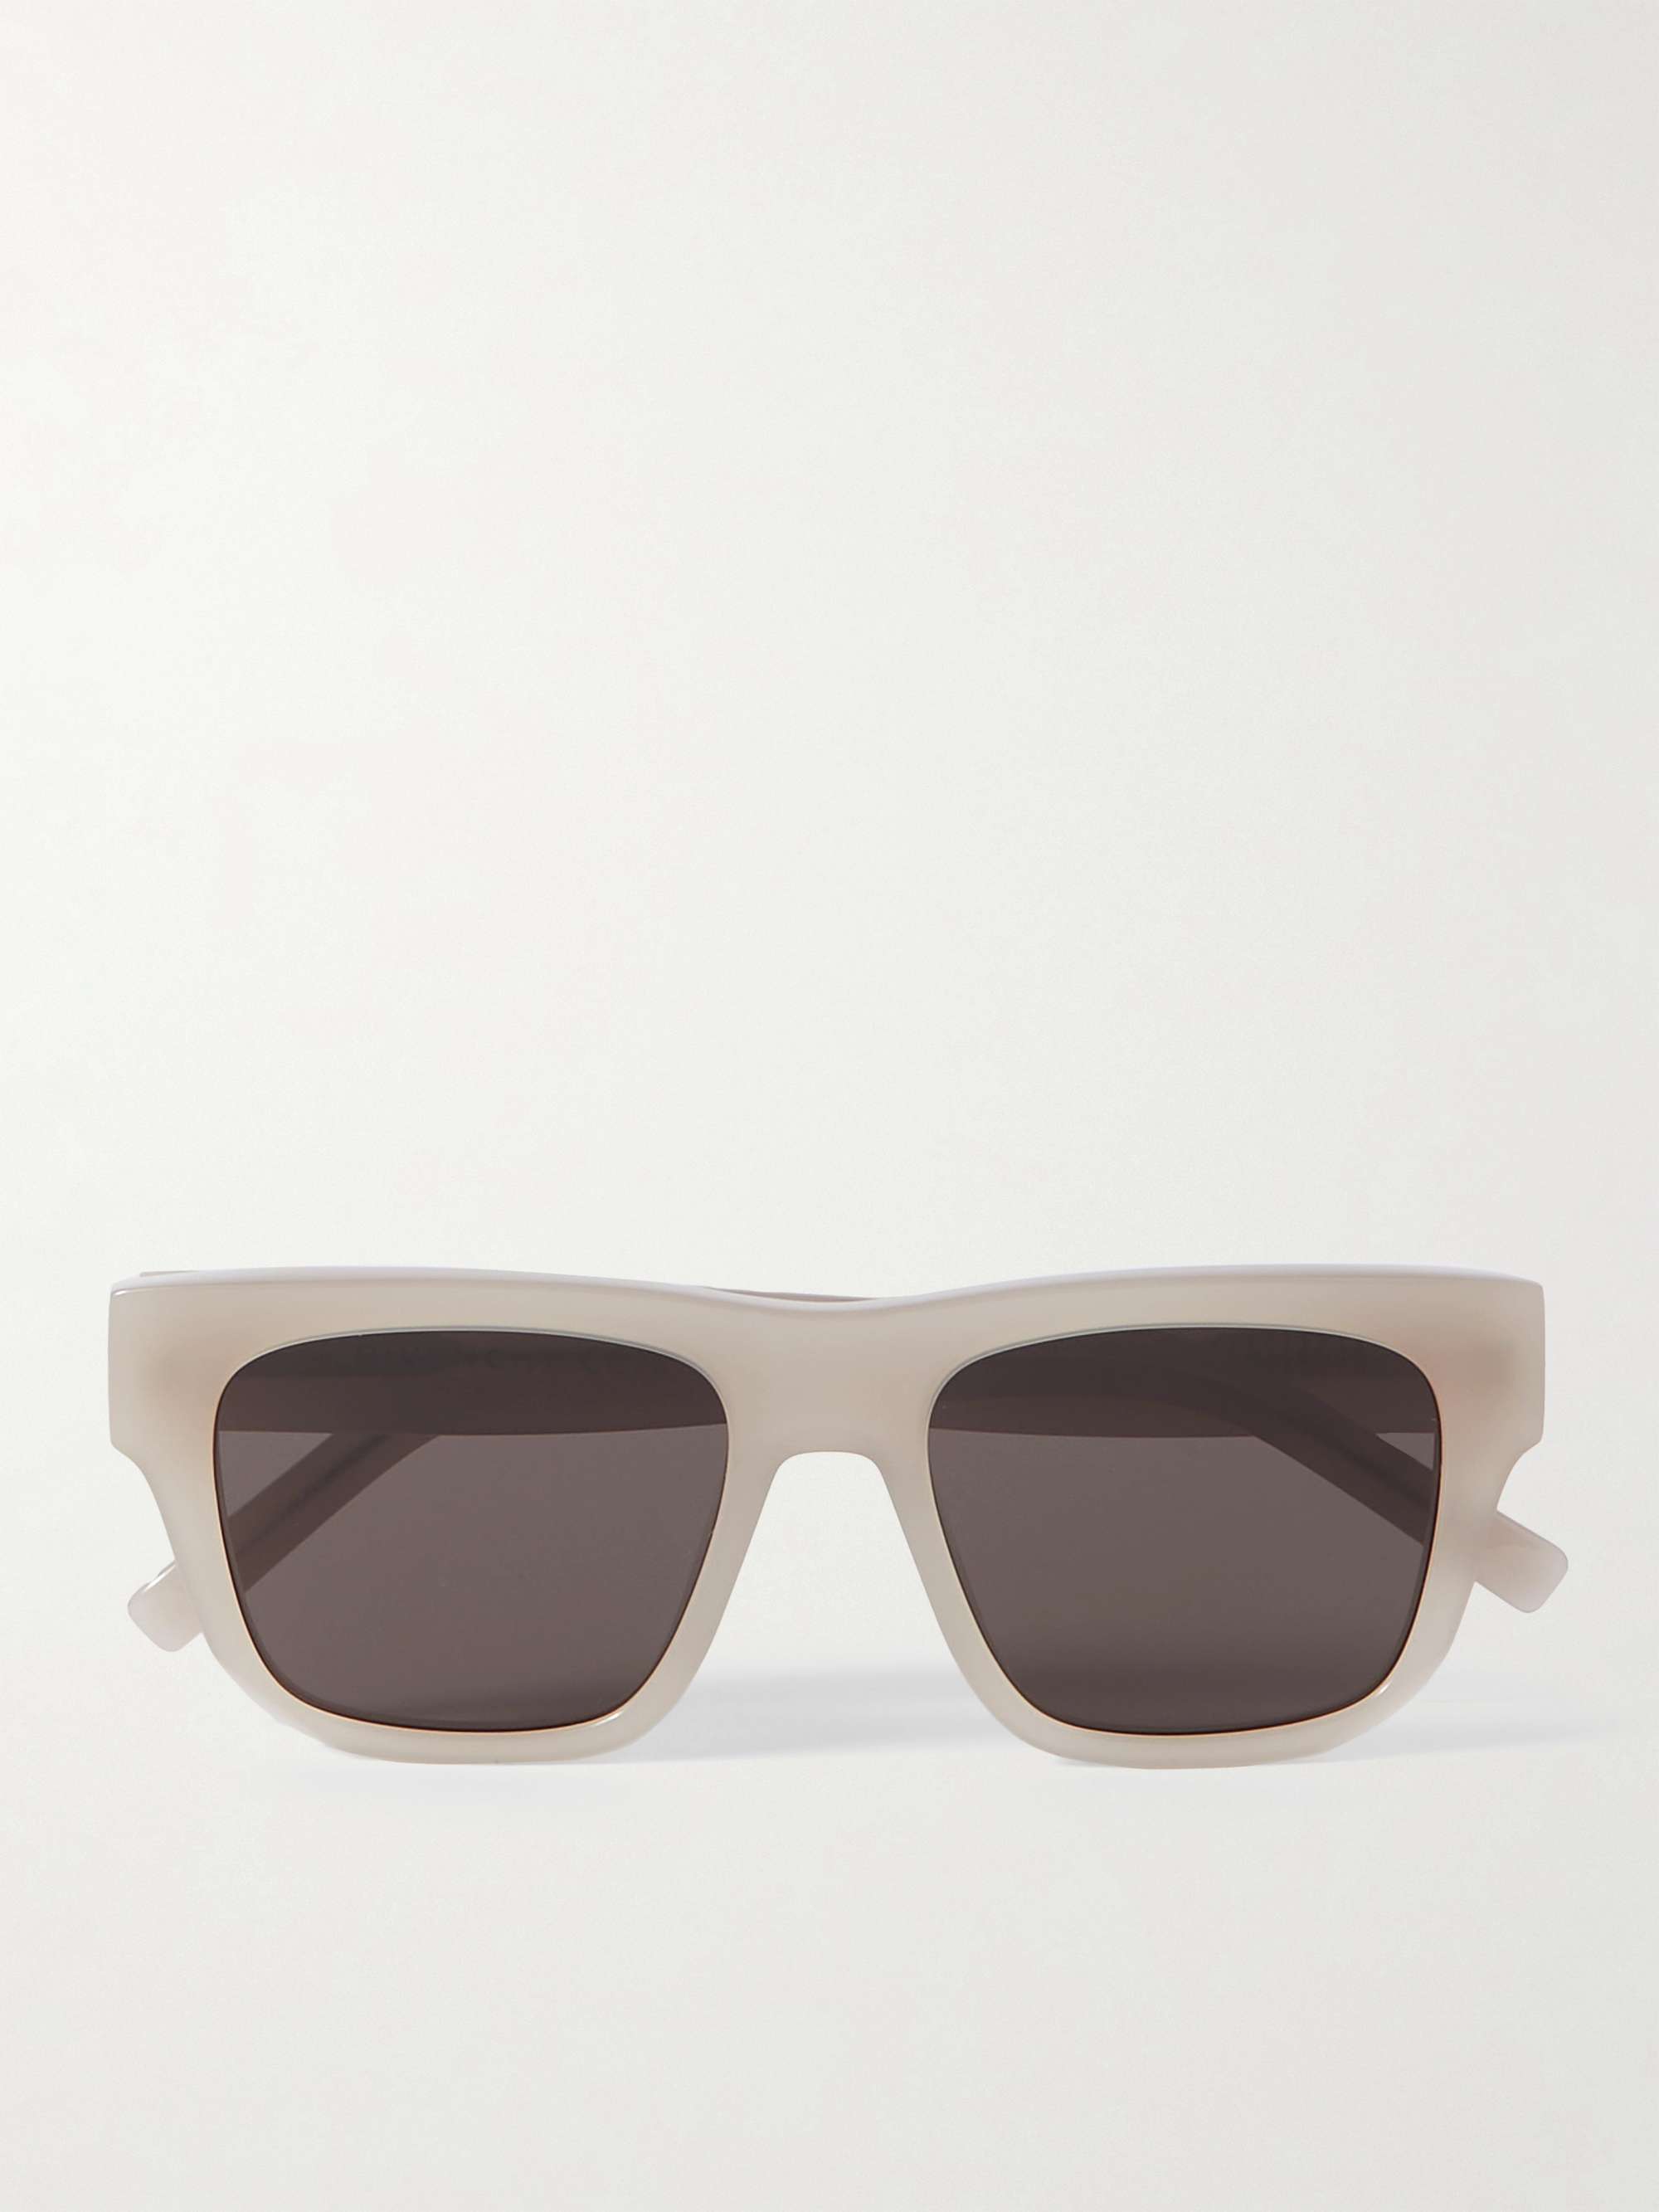 GIVENCHY EYEWEAR GV Day Square-Frame Acetate Sunglasses for Men | MR PORTER